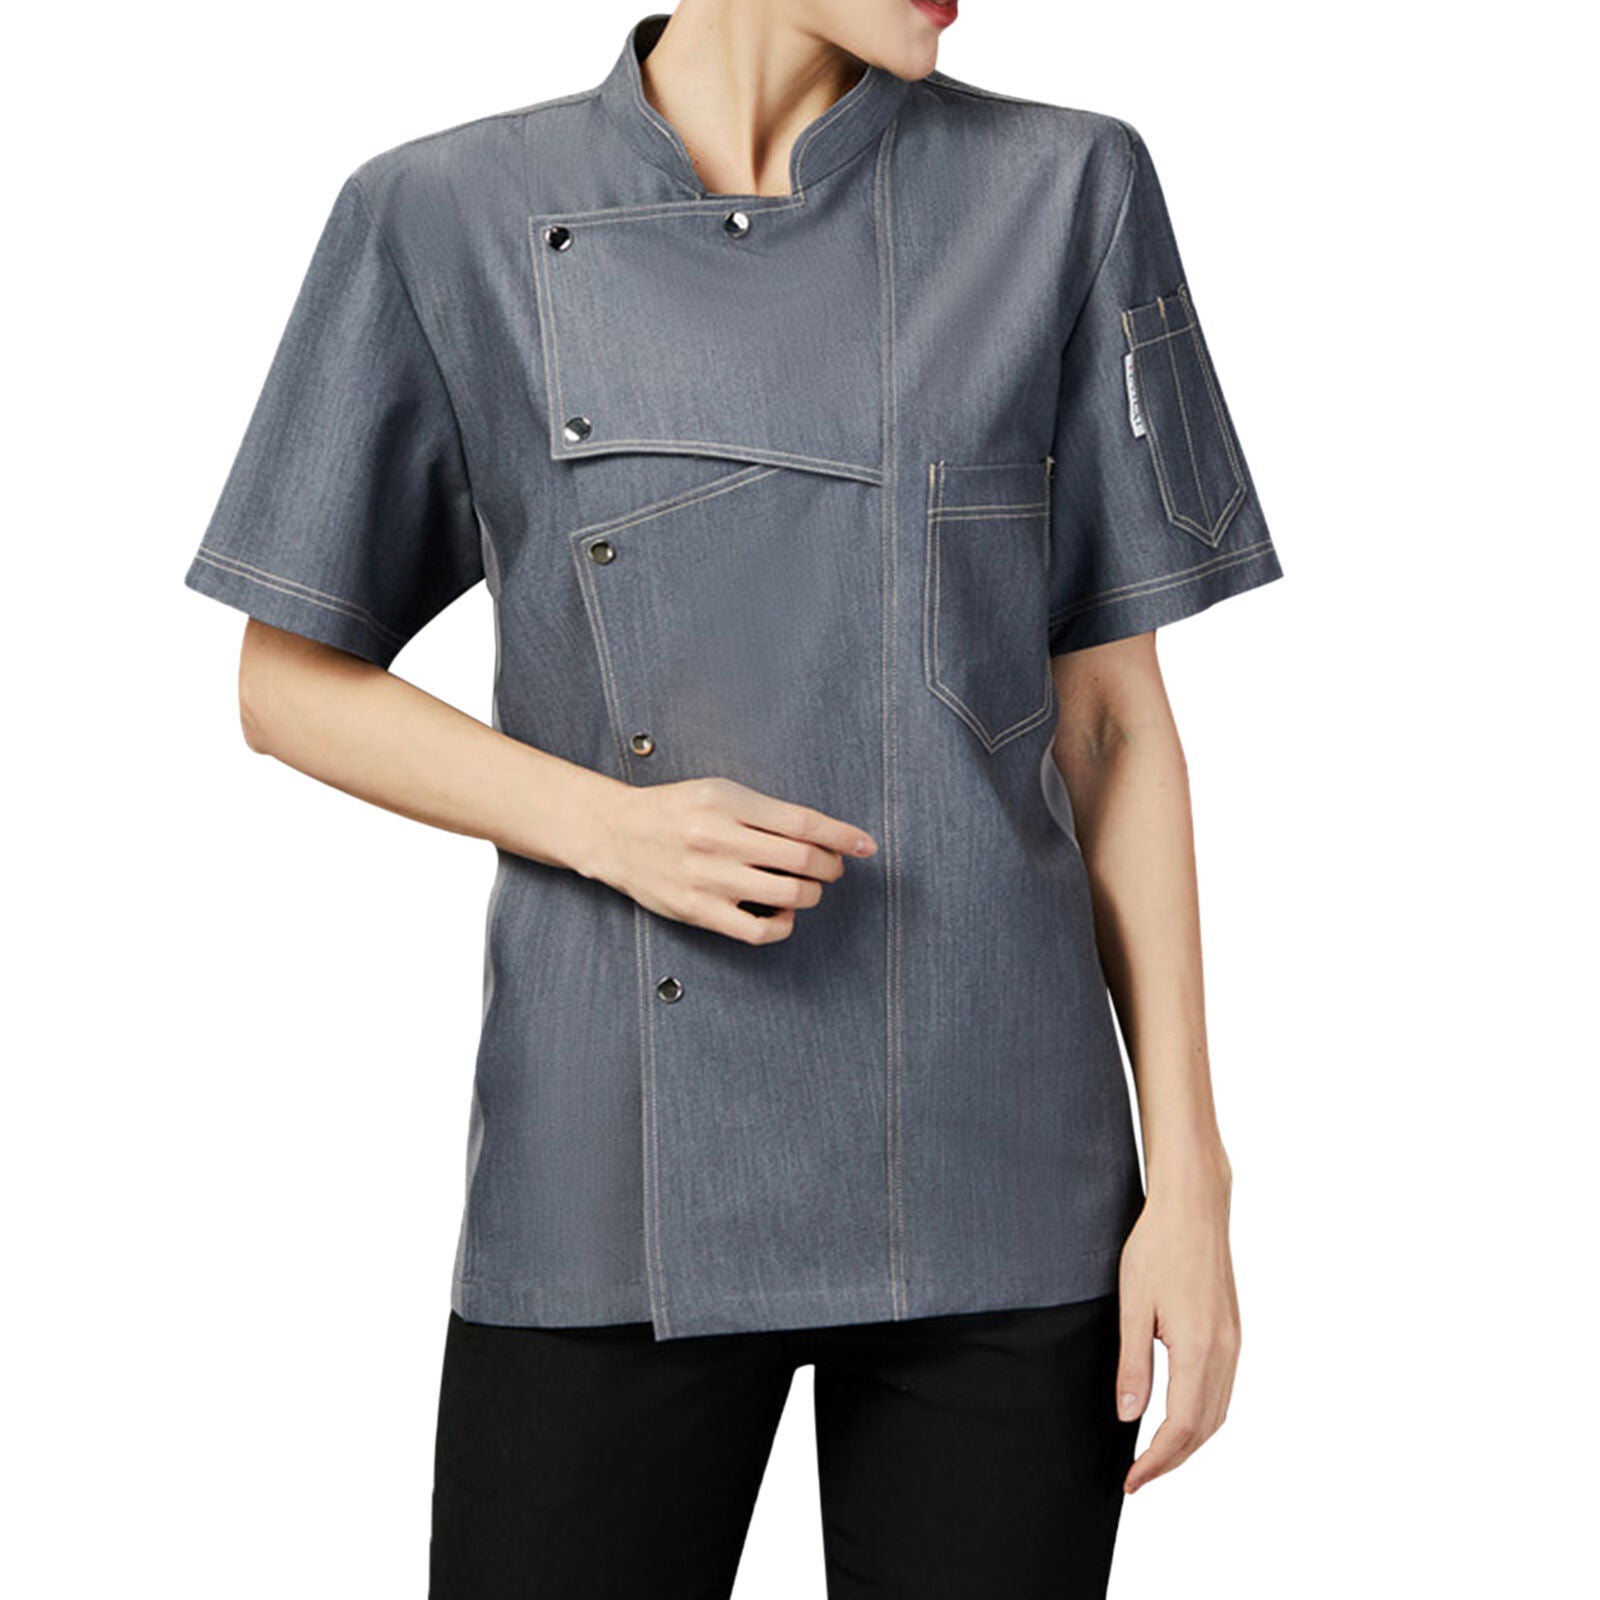 Chef Coat Short Sleeve Men Collar Tops with Pocket Restaurant Canteen Uniform